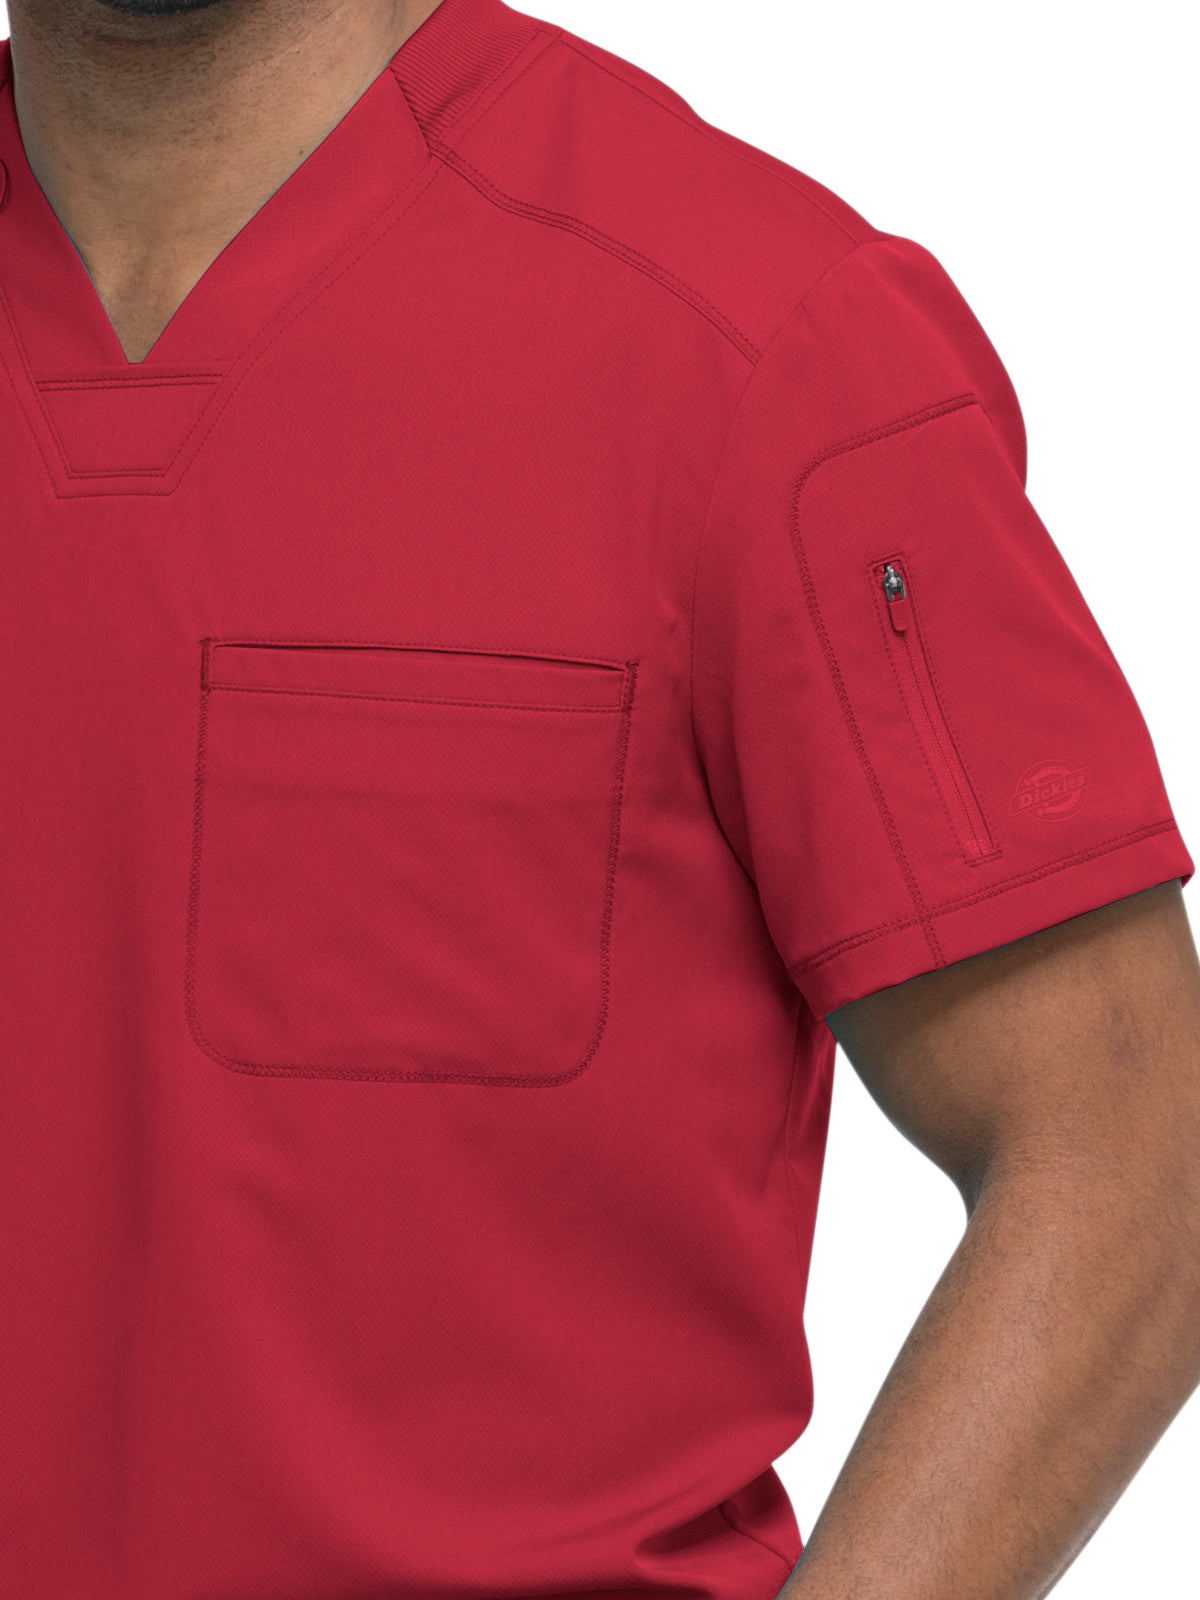 Men's 2-Pocket Tuckable Scrub Top - DK610 - Red